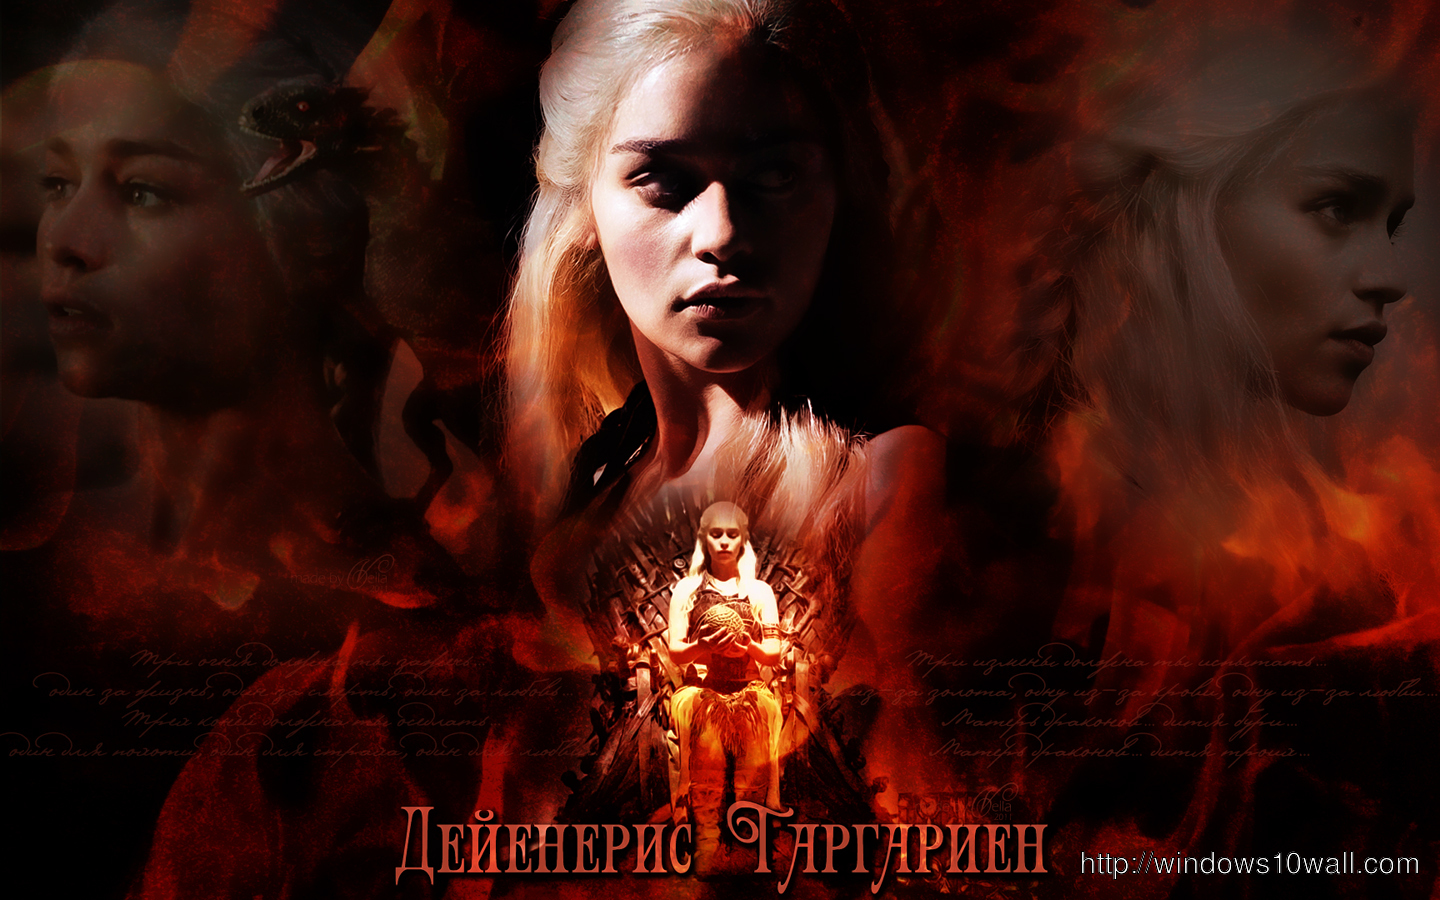 Daenerys Targaryen wallpaper free download for mobile